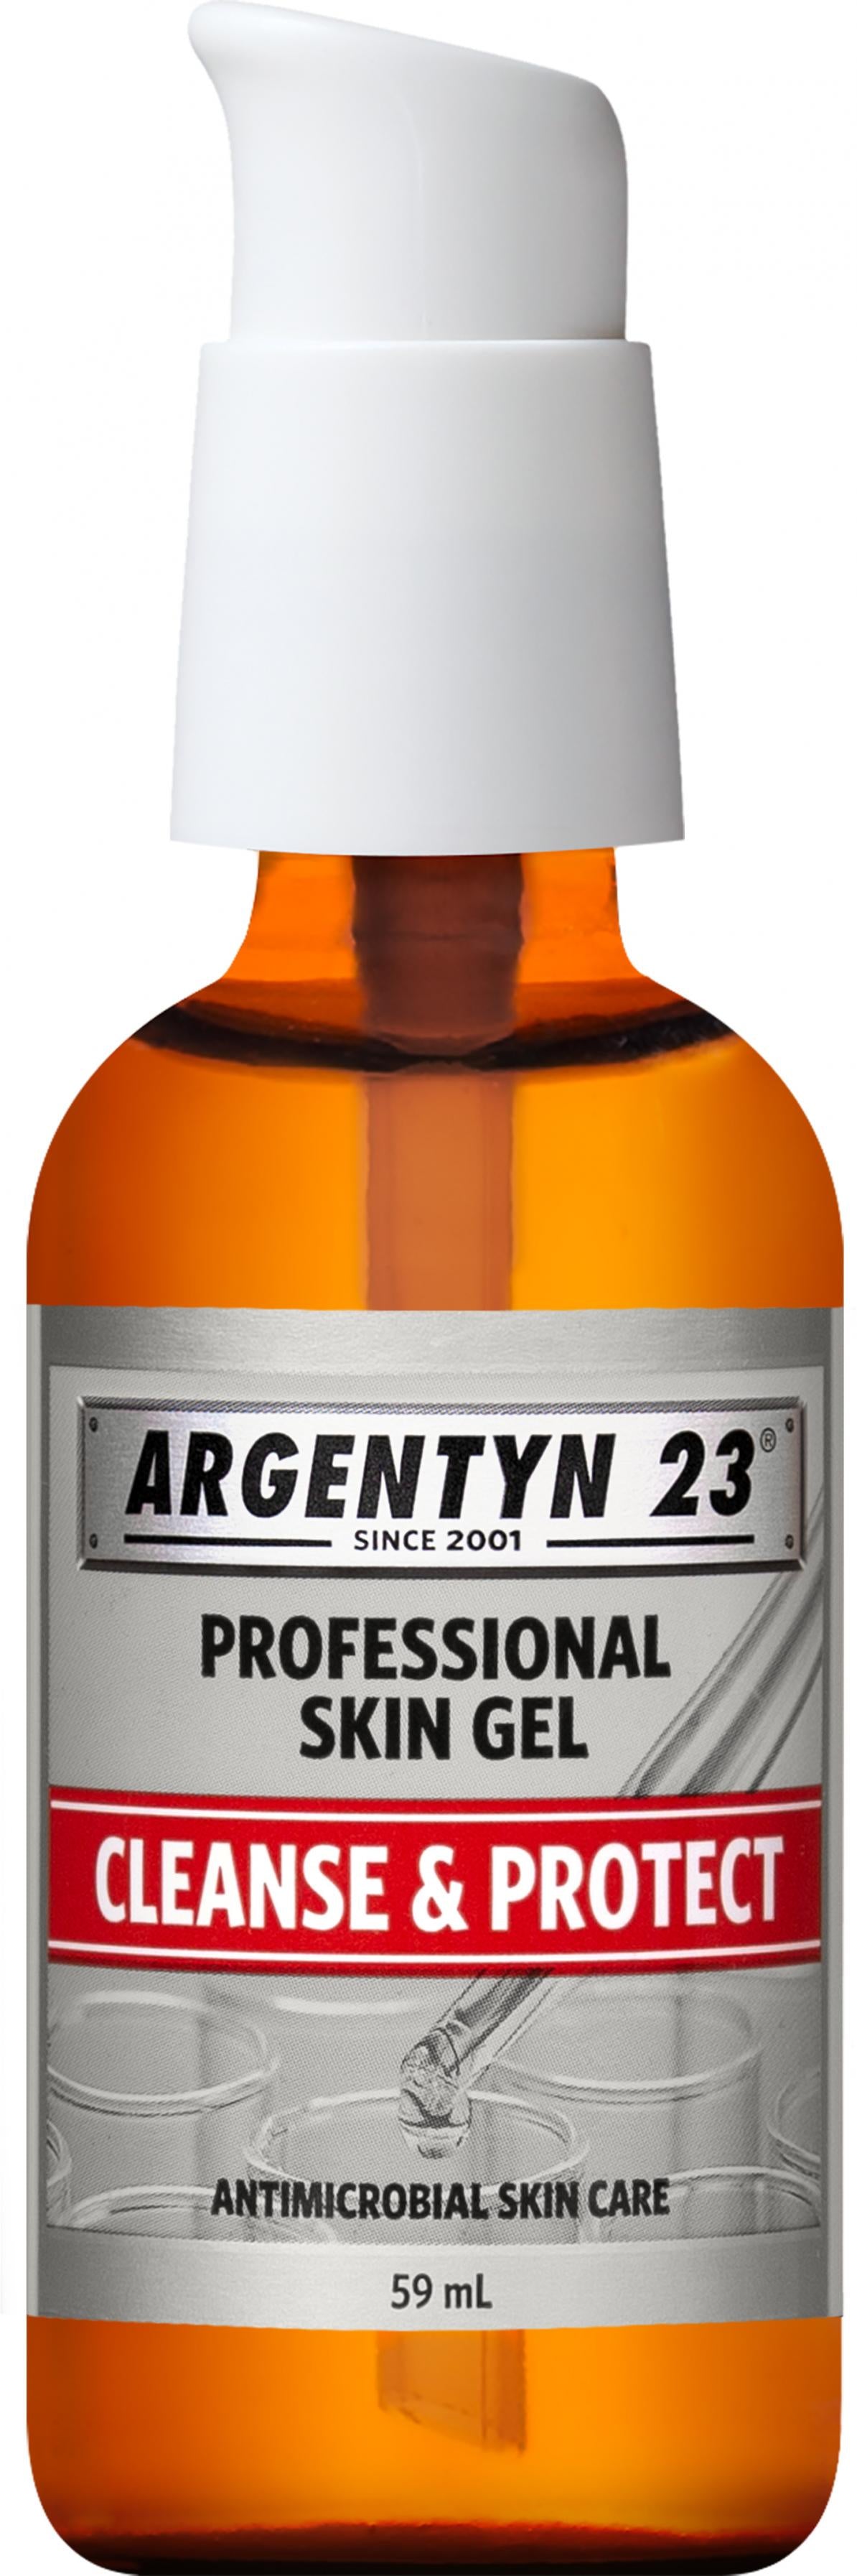 Argentyn 23 Argentyn Professional Skin Gel Cleanse & Protect 59ml